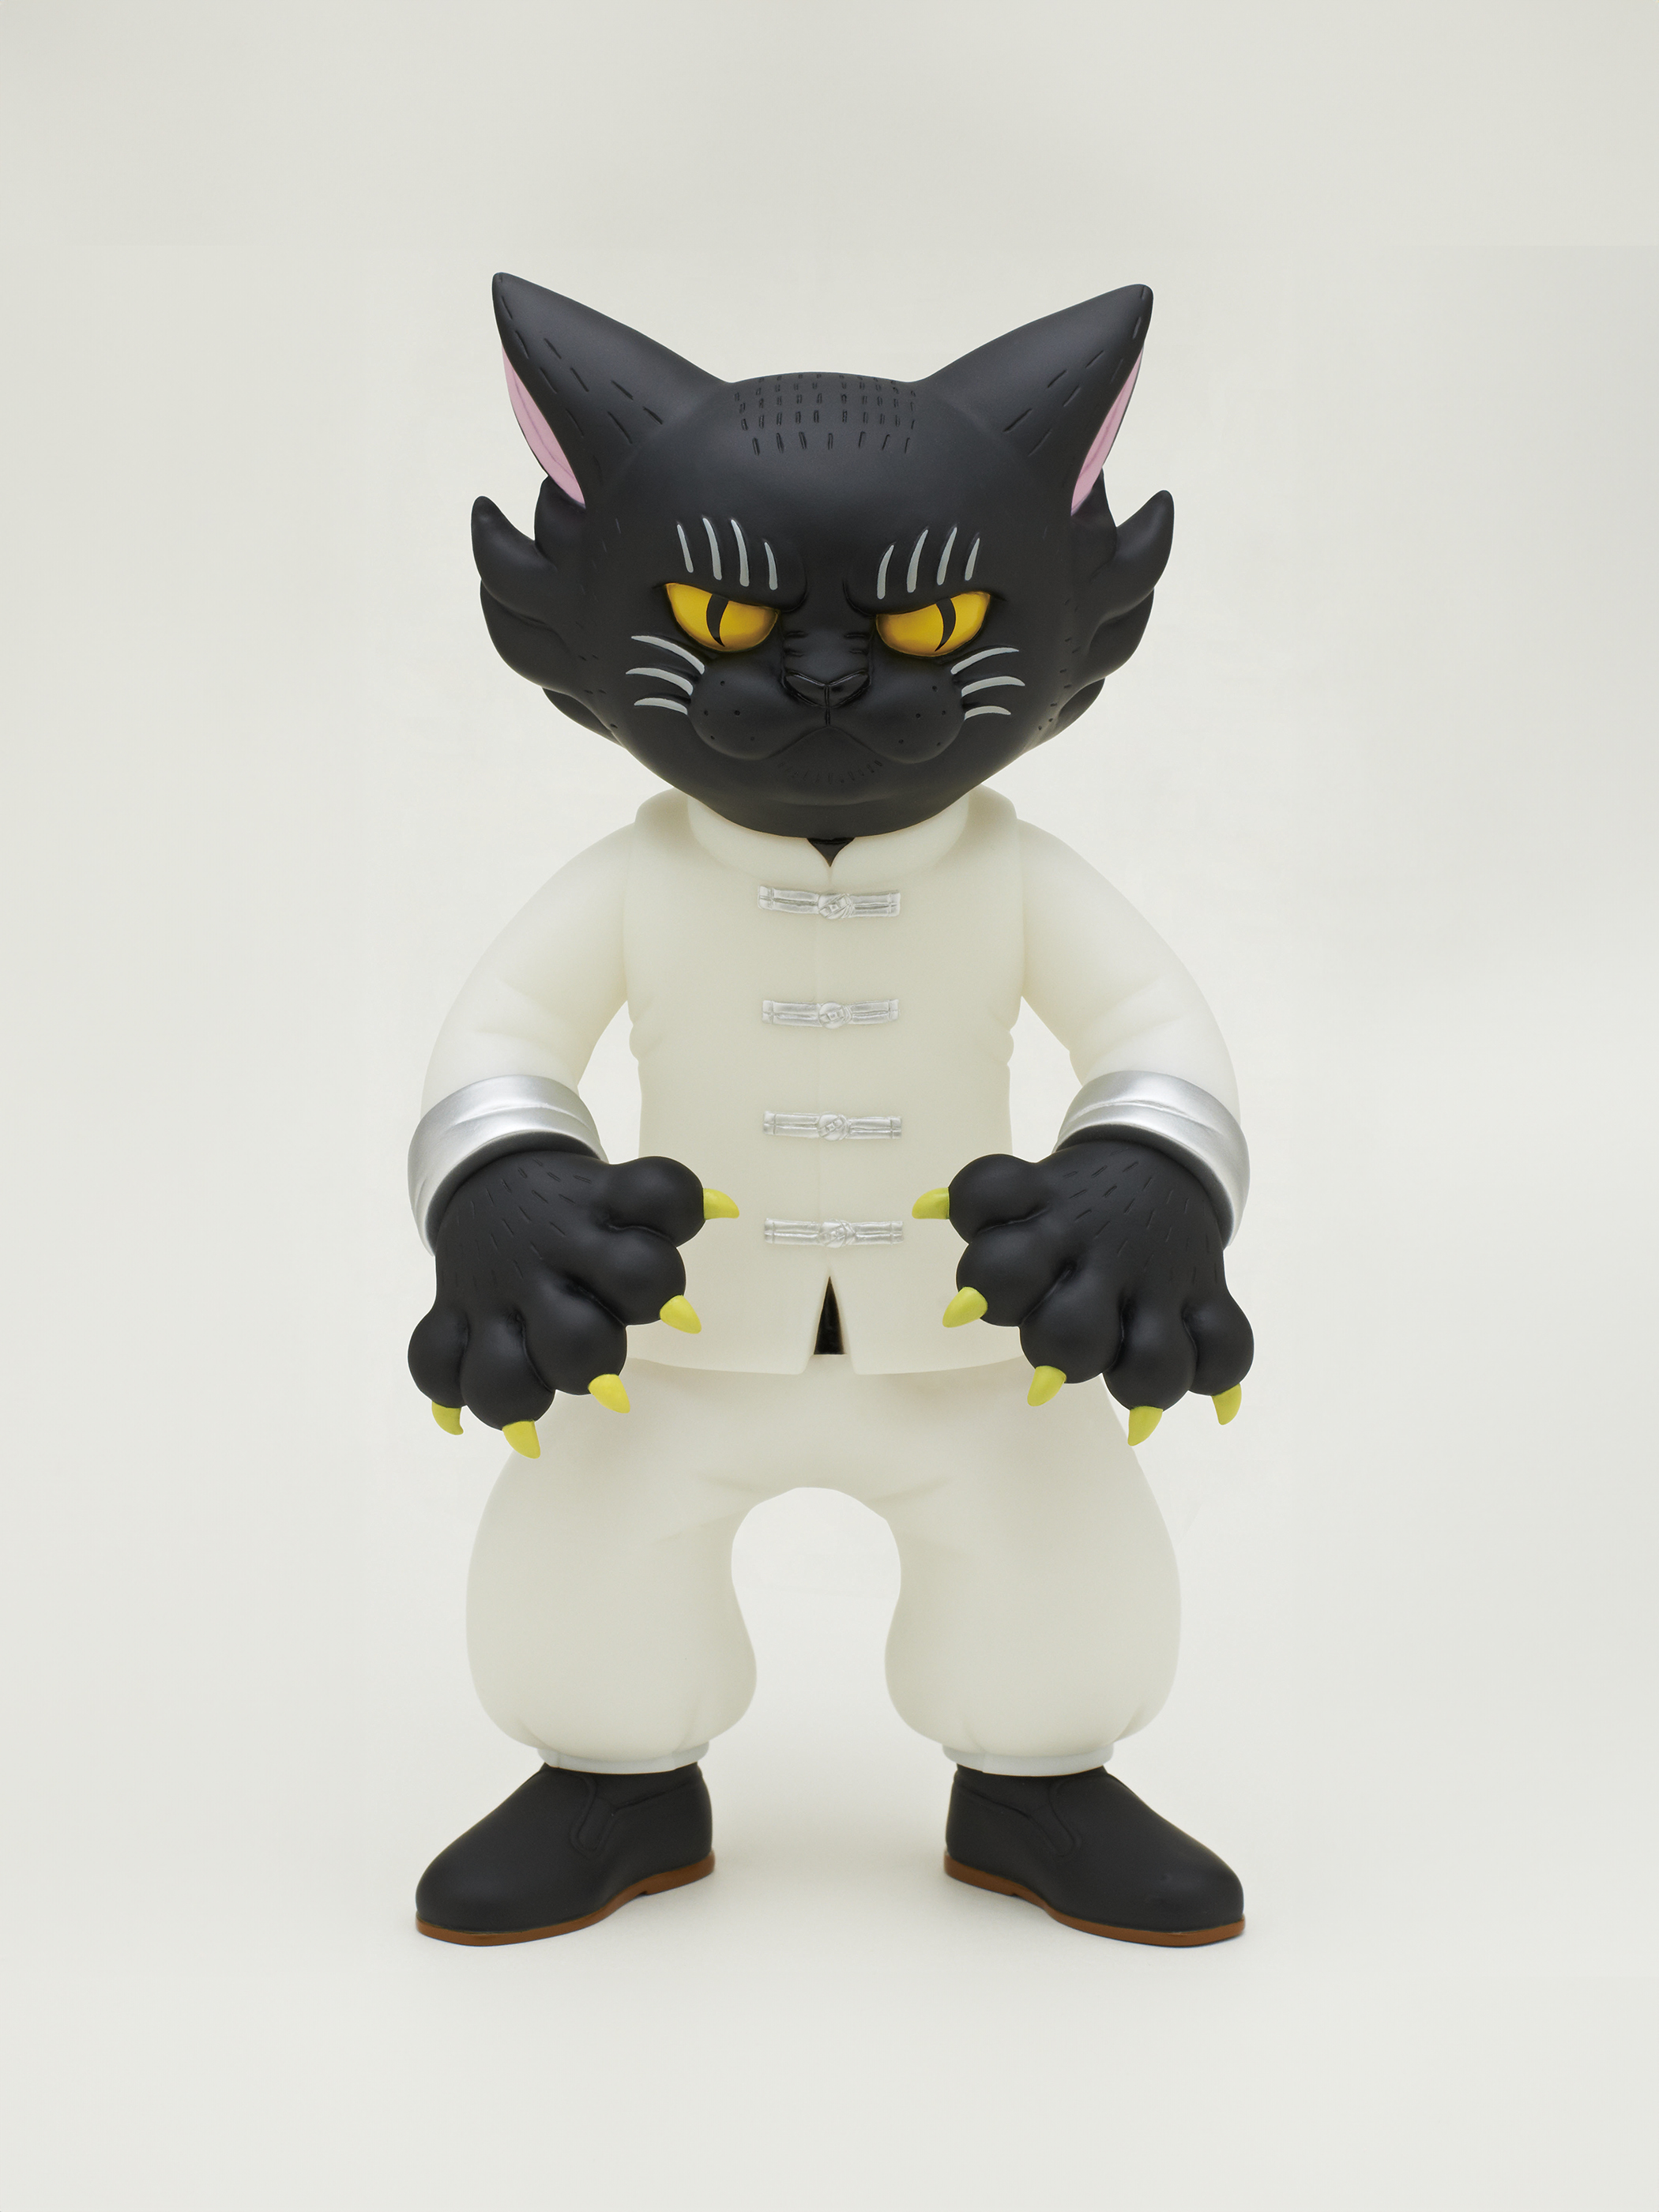 Soft Vinyl Figure Kung Fu Cat, Black Cat